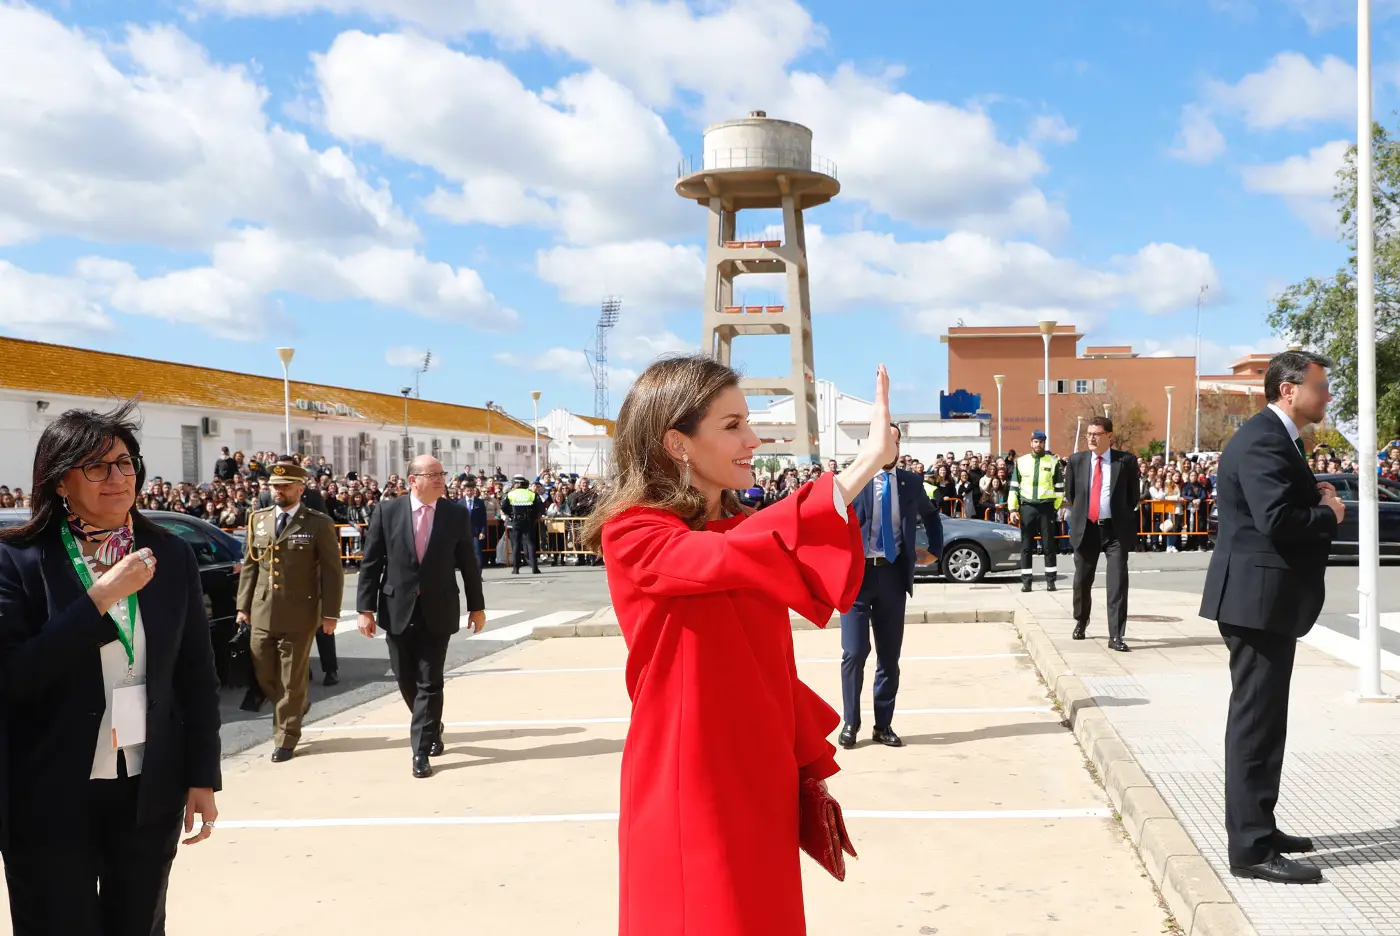 Vibrant Letizia - Queen of Spain chose red for University visit